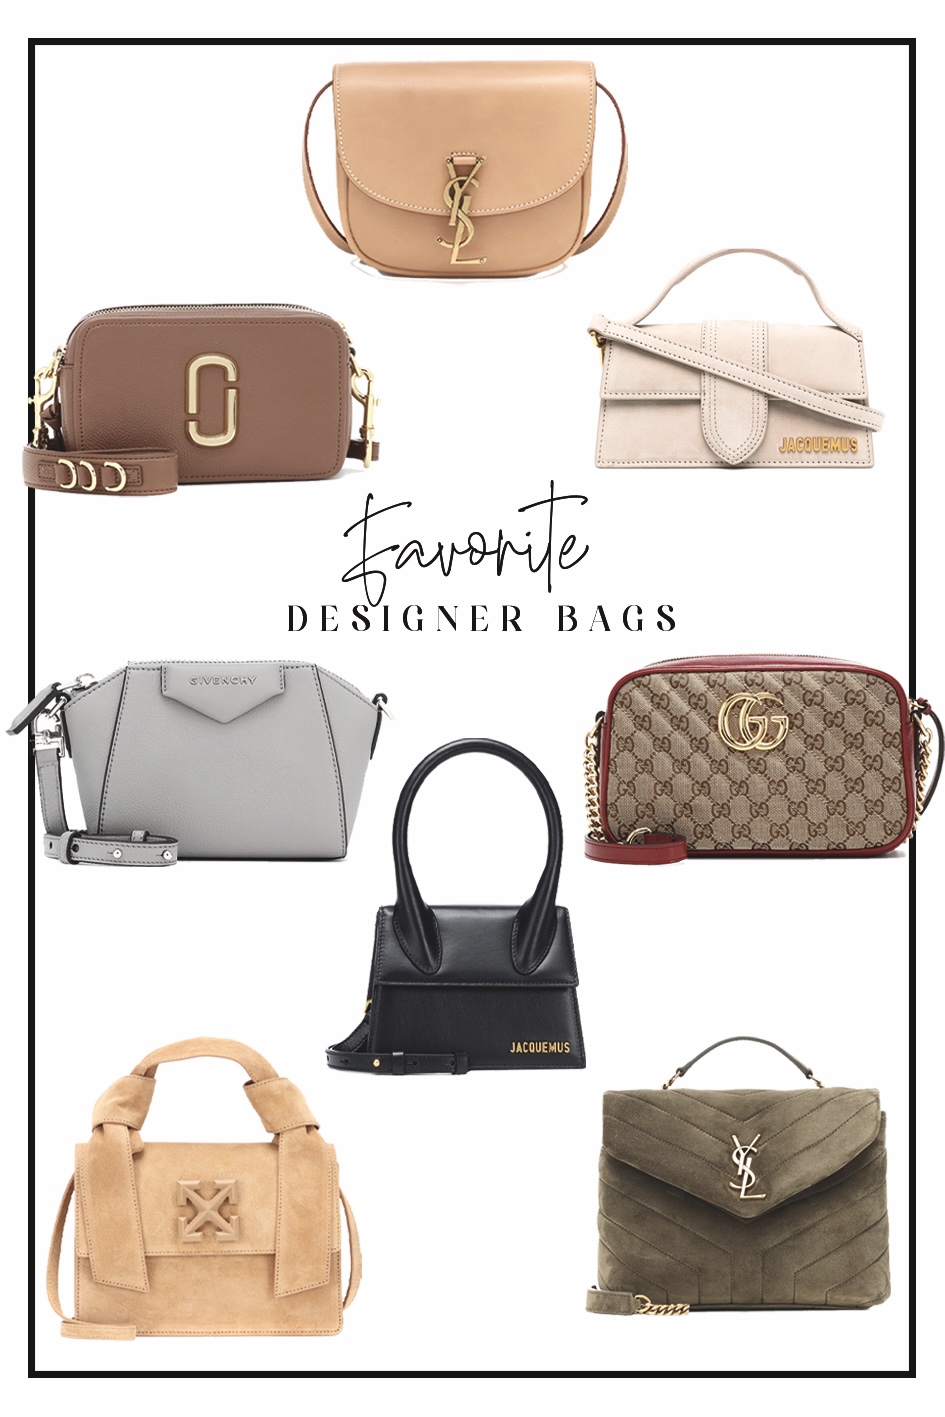 Top 8 designer handbags on my wishlist